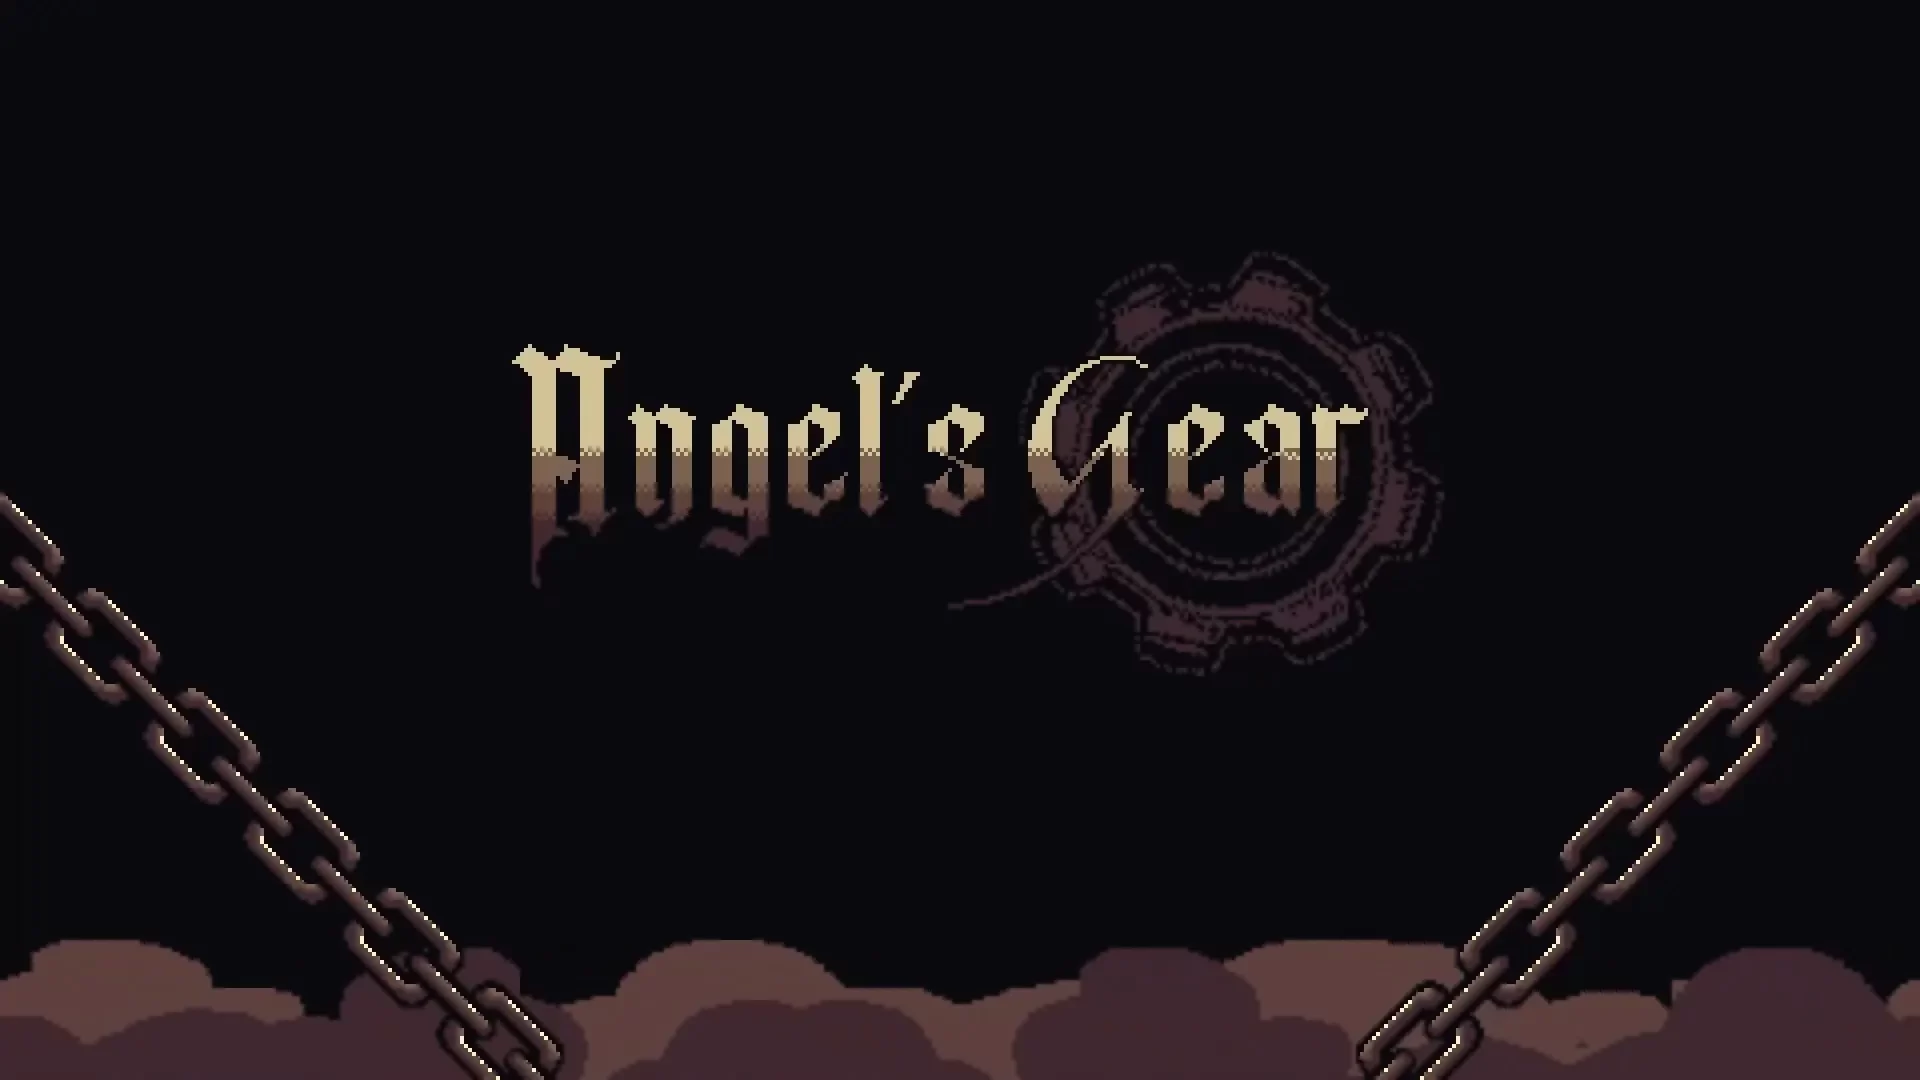 angels-gear-4797031